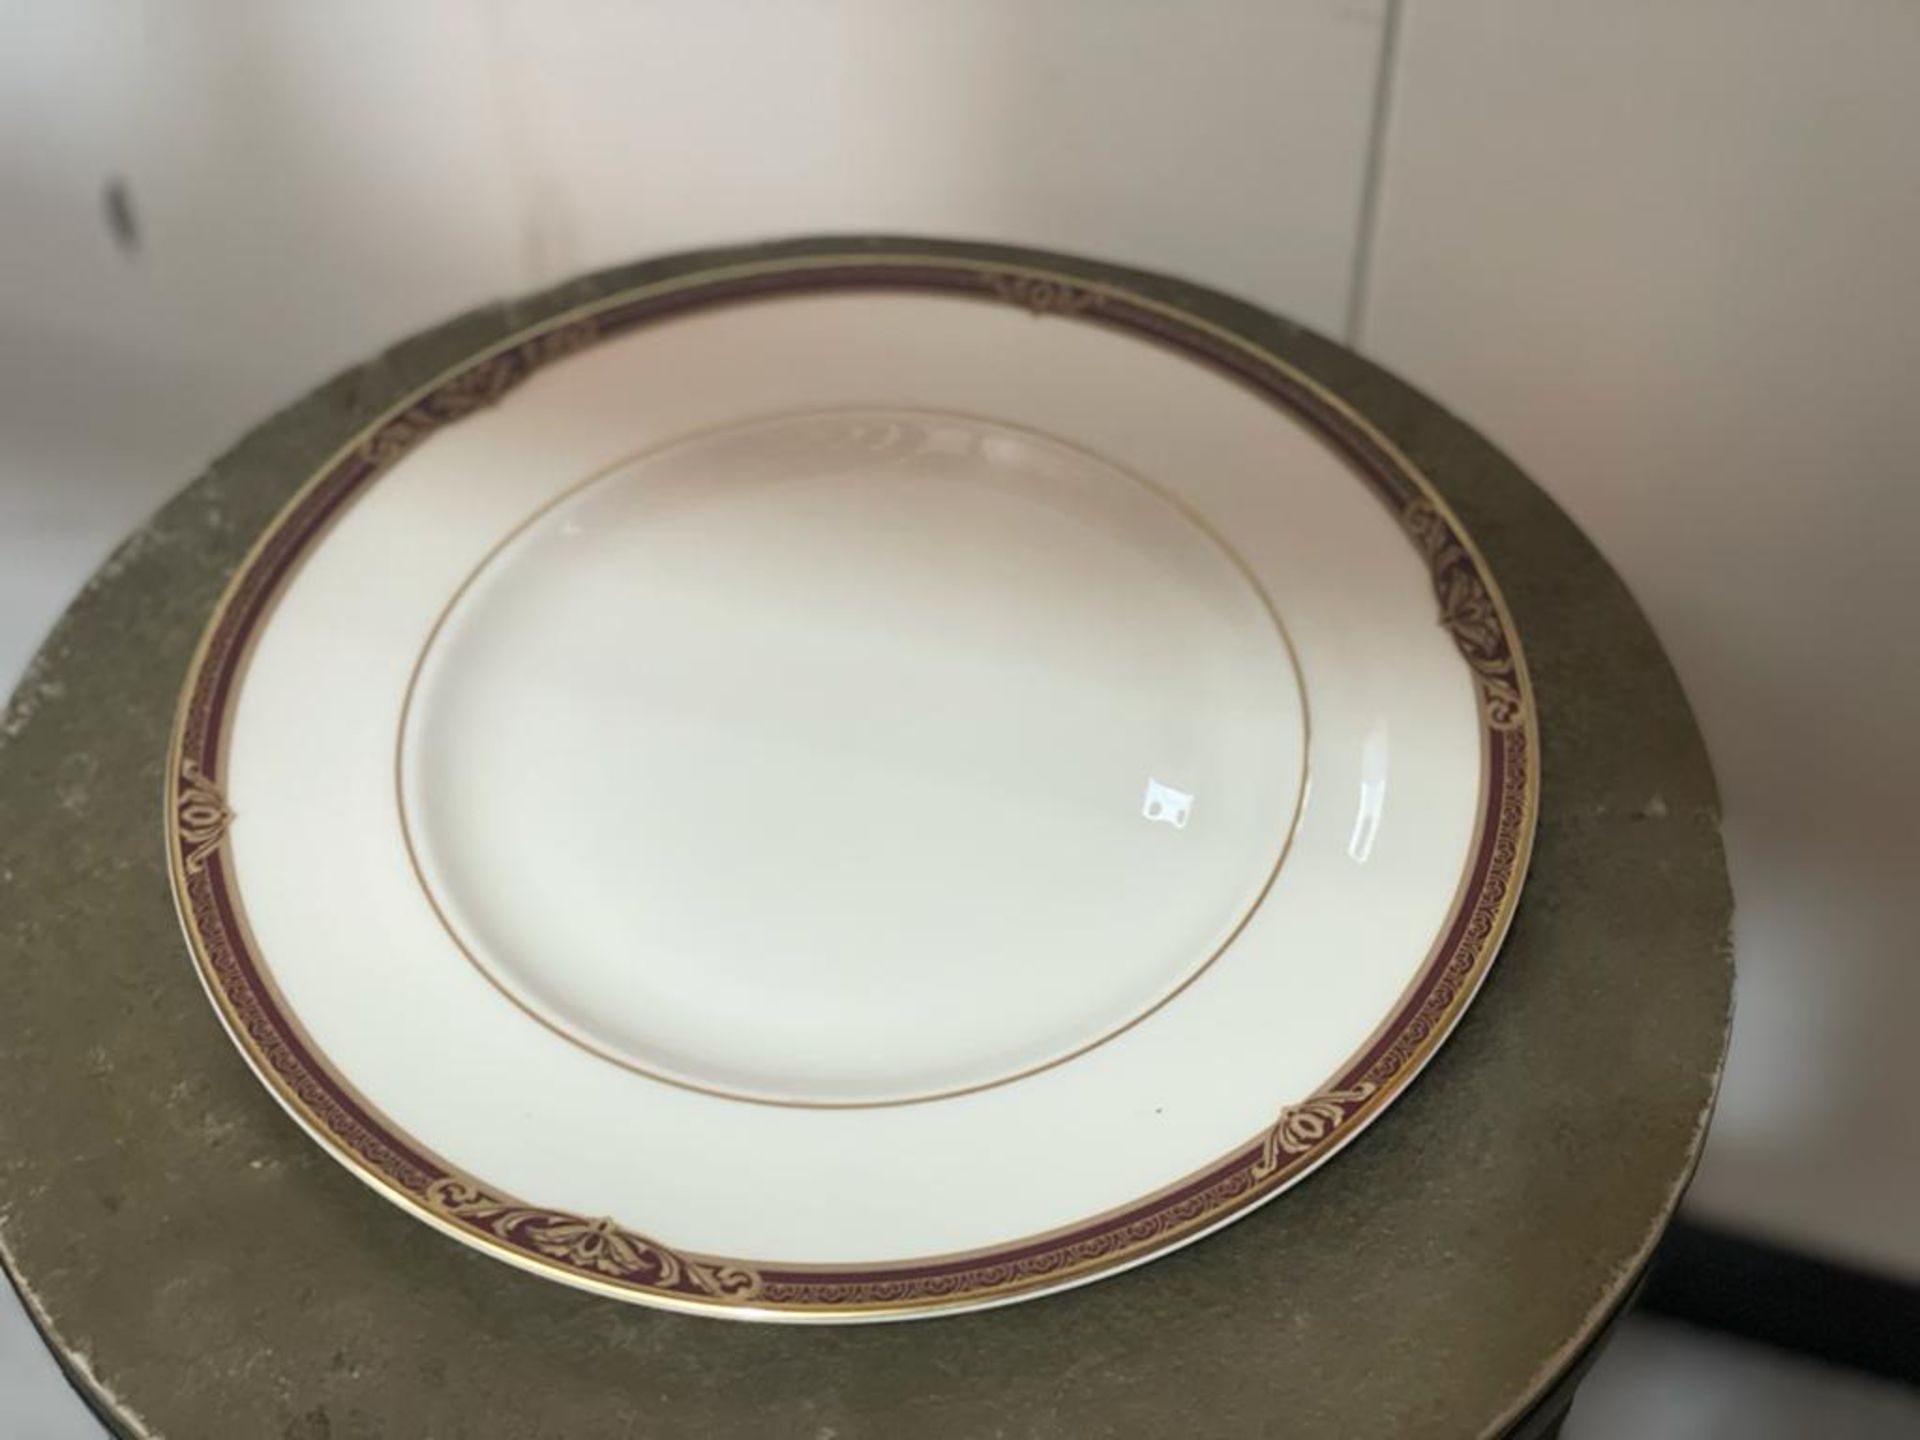 1 x Tennyson Royal Doulton Set Of Plates - Ref: AUR127 - CL652 - Location: Altrincham WA14 16 x - Image 10 of 13